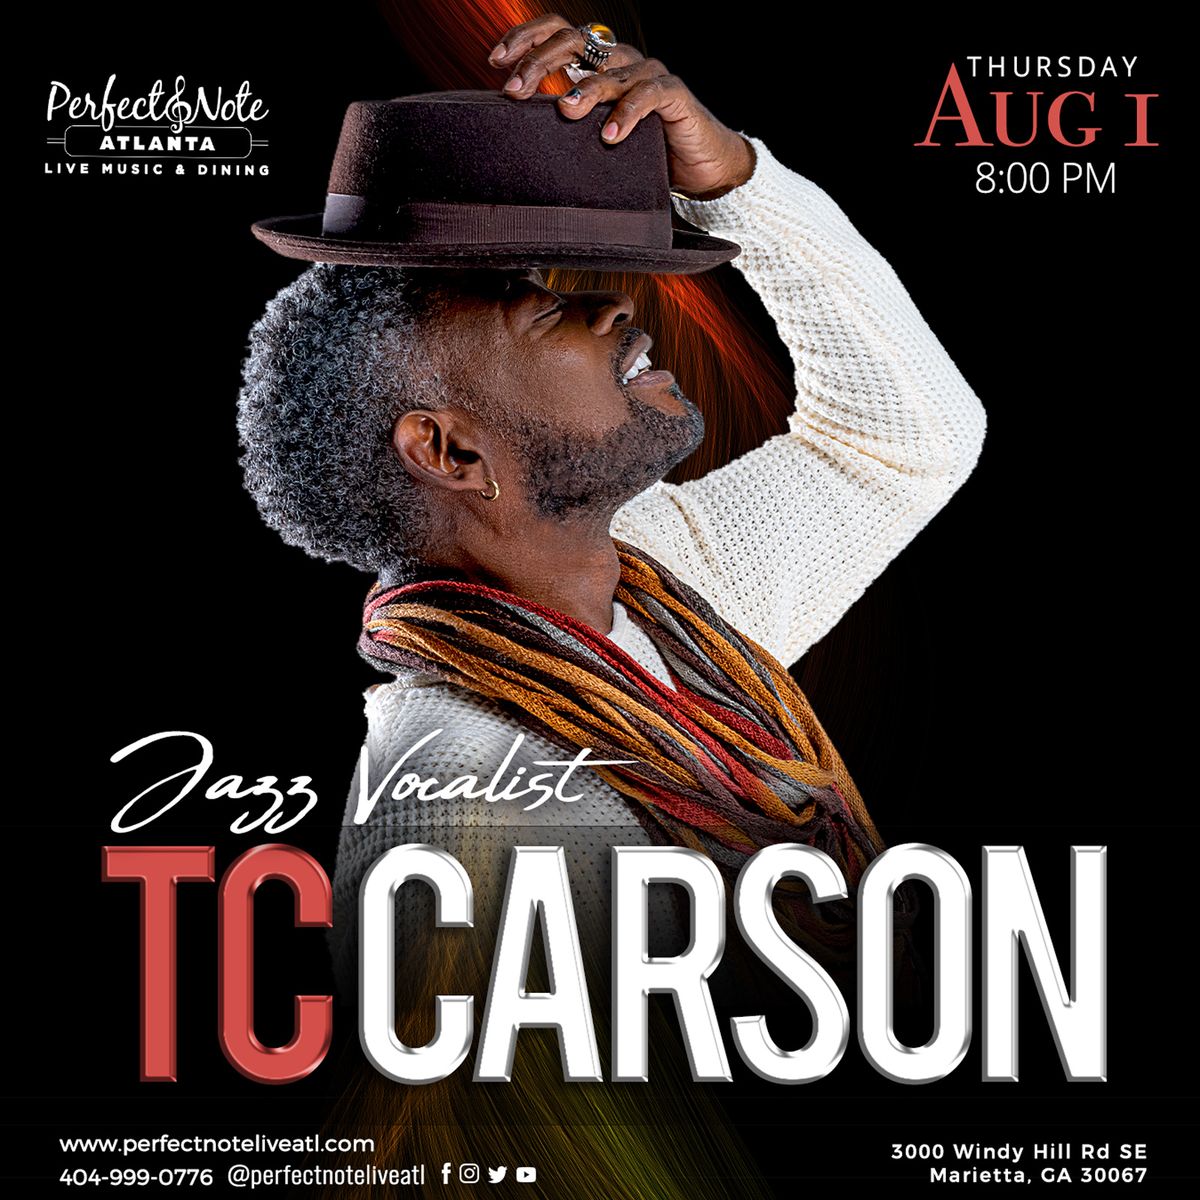 Singer TC Carson